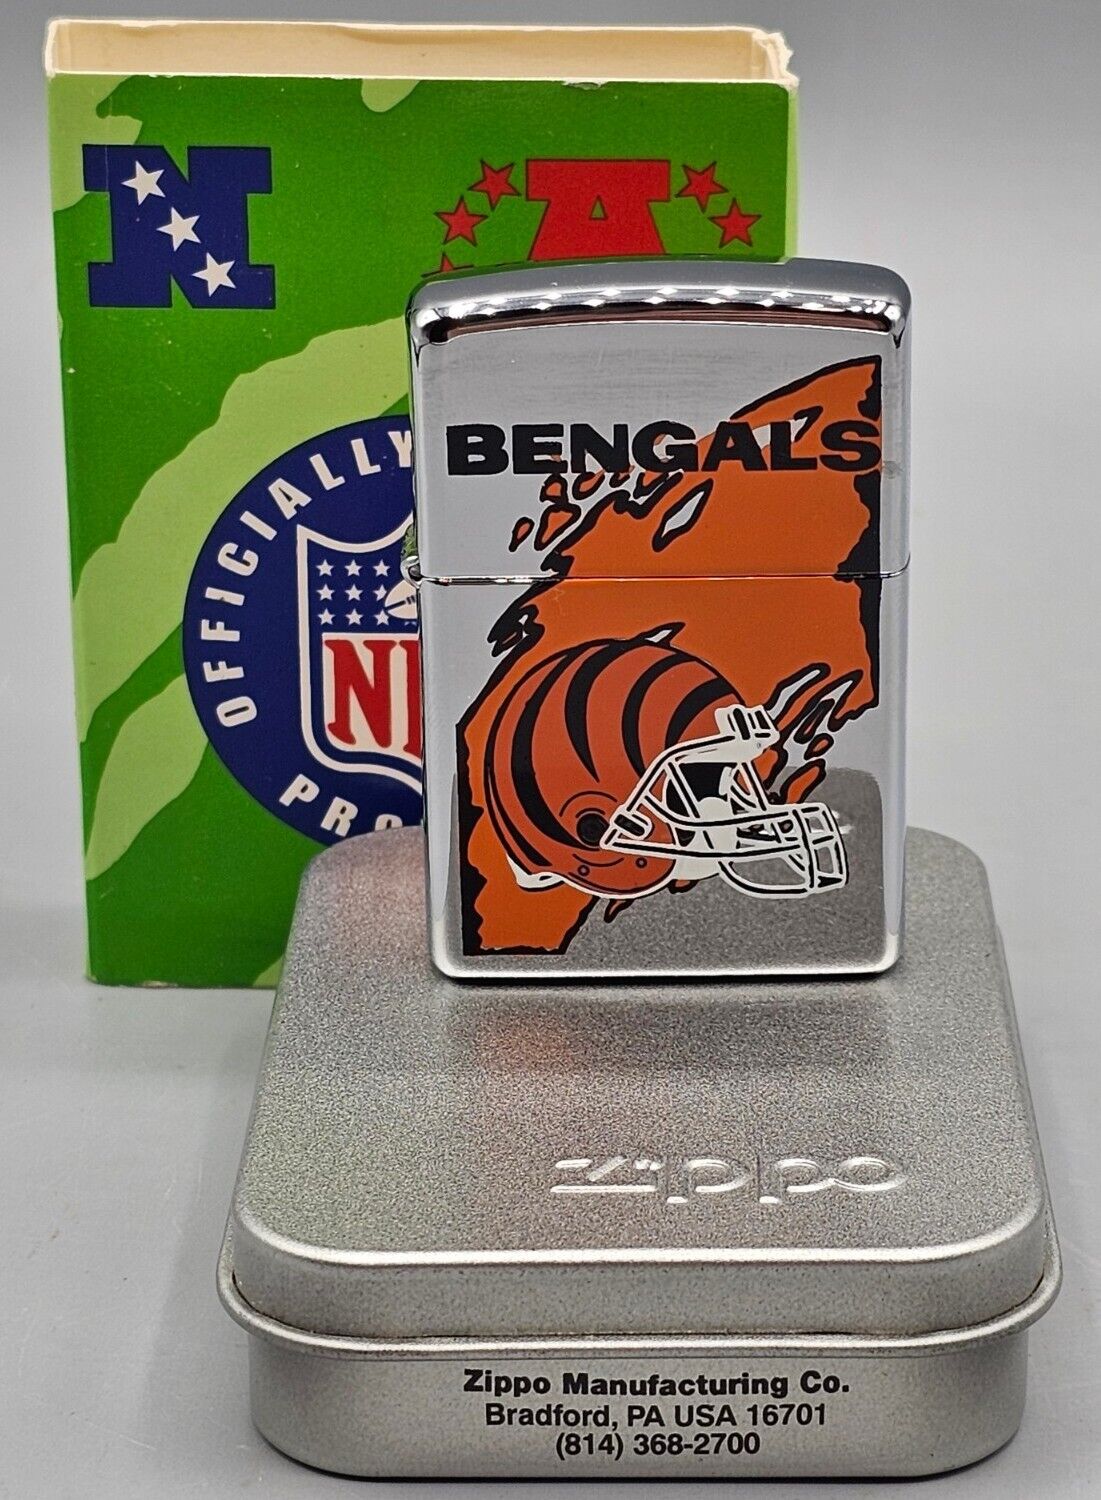 VINTAGE 1997 NFL Cincinnati BENGALS Chrome Zippo Lighter #459 - NEW in PACKAGE 